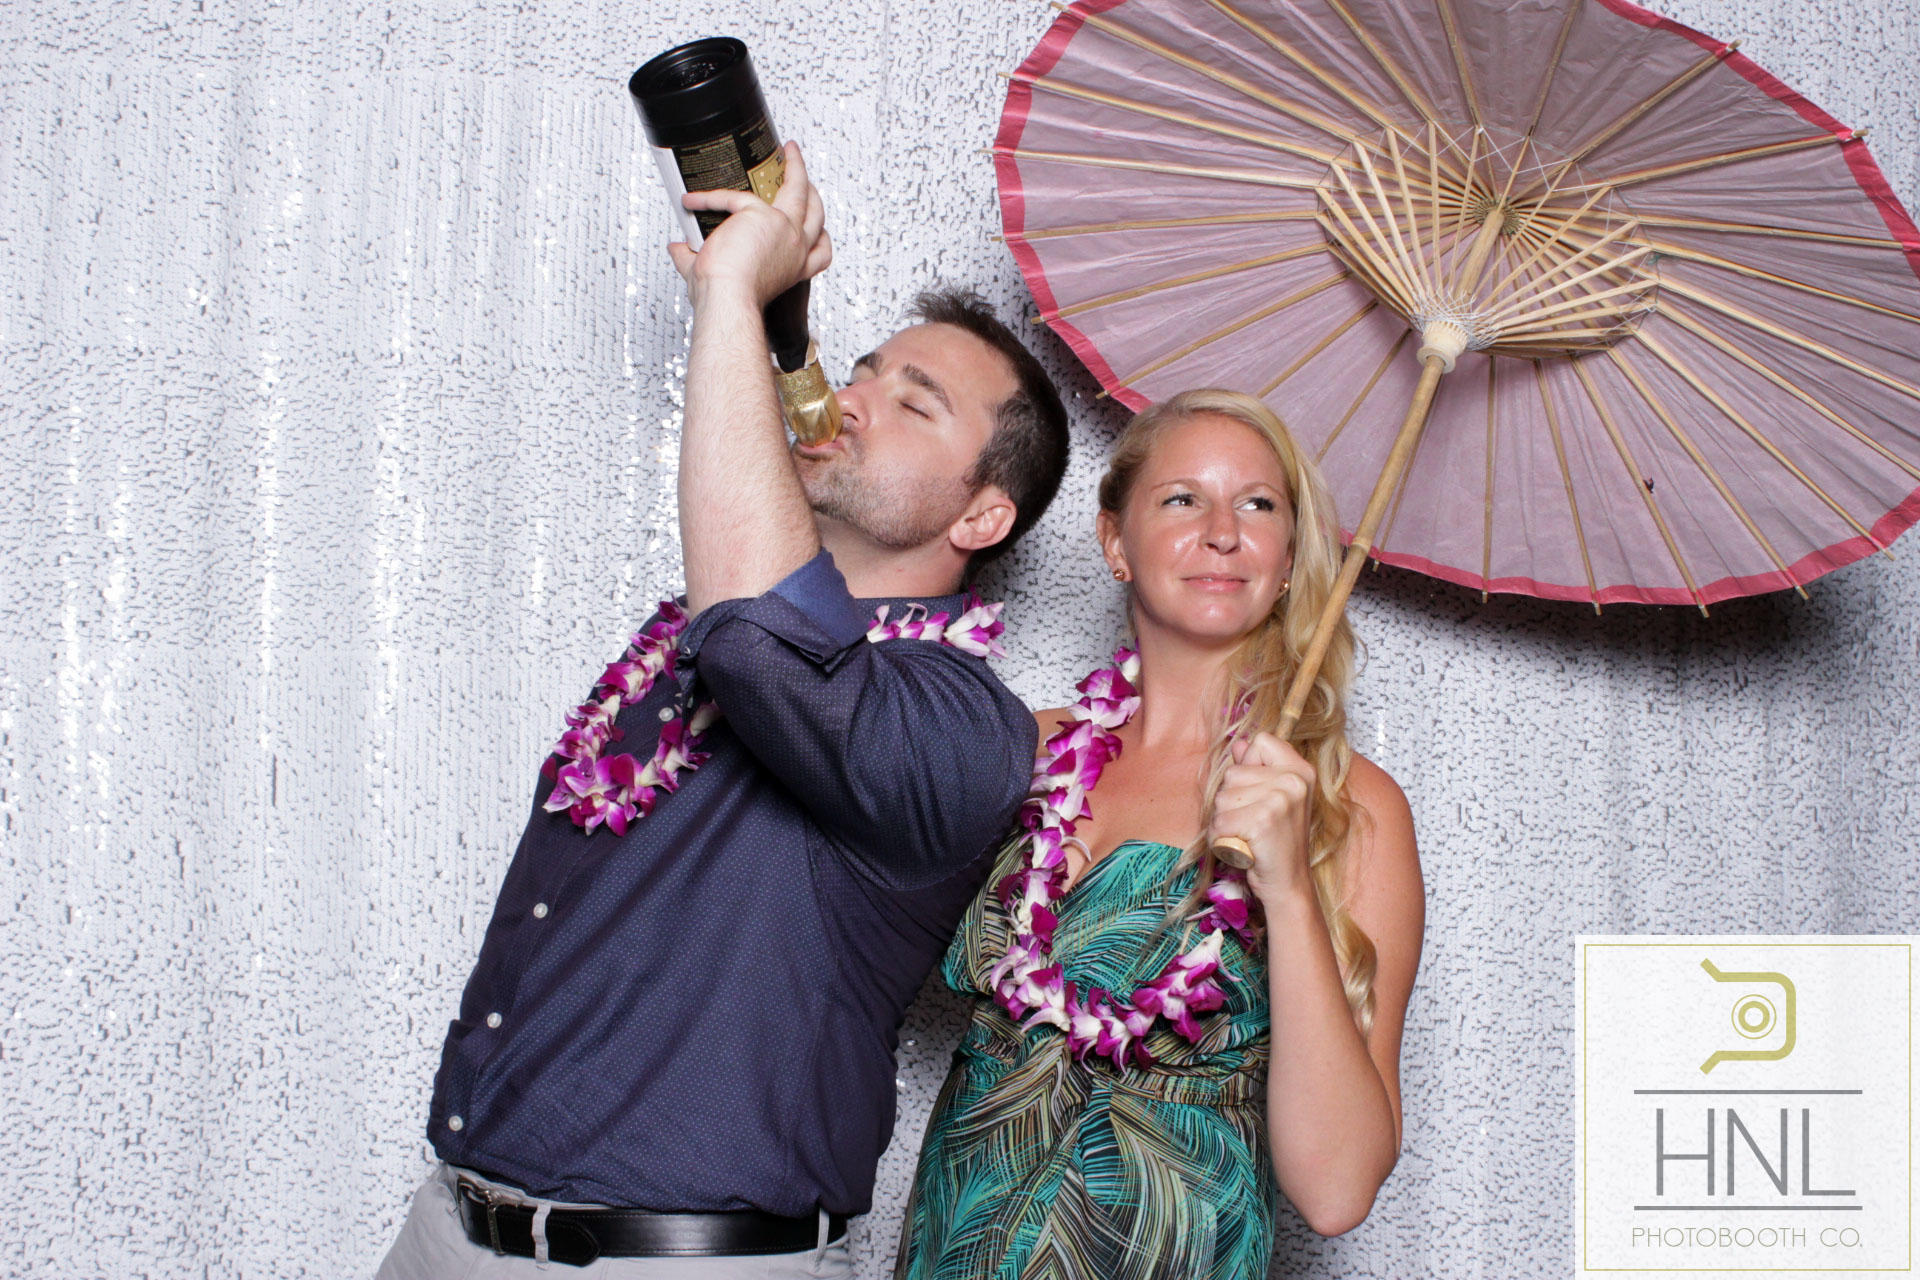 Miki and Dan wedding photo booth Lanikohonua Kapolei Oahu Hawaii  (30).jpg